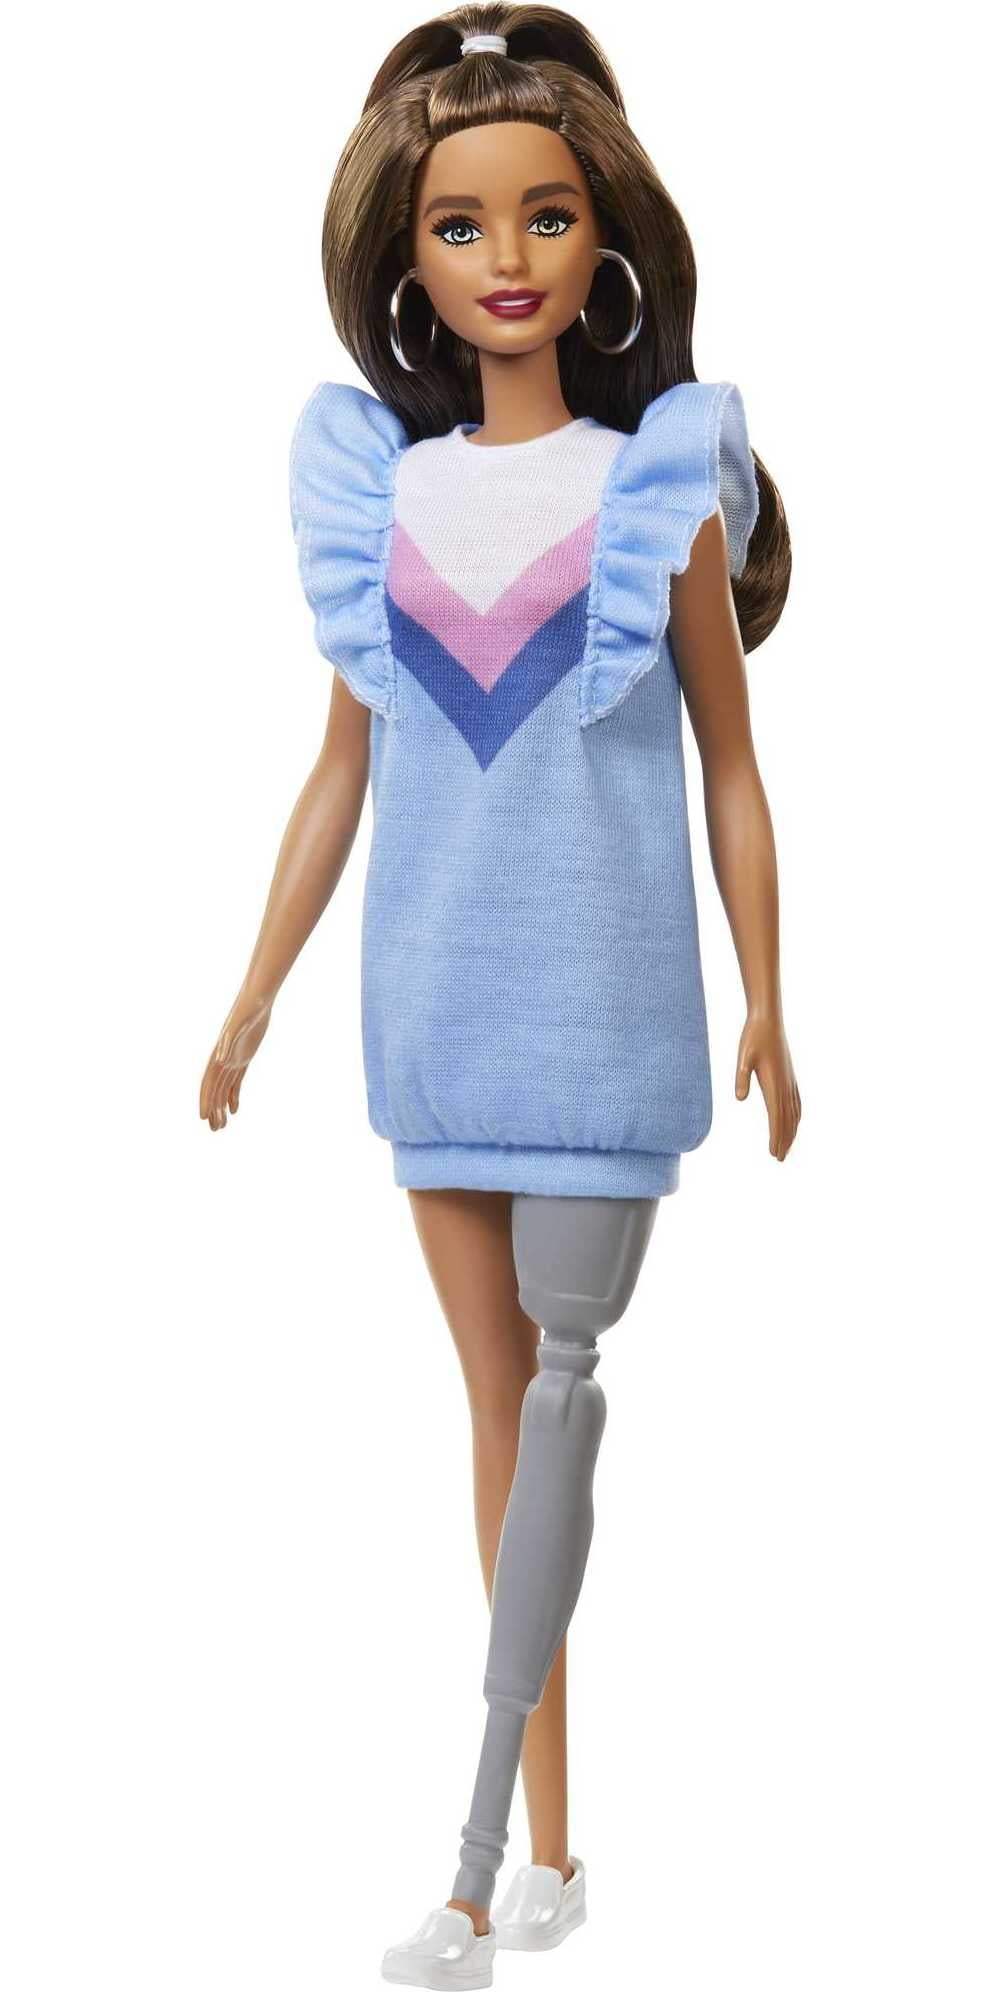 Barbie Fashionistas Doll Ken #152 Tropical Print Shirt GHW68 